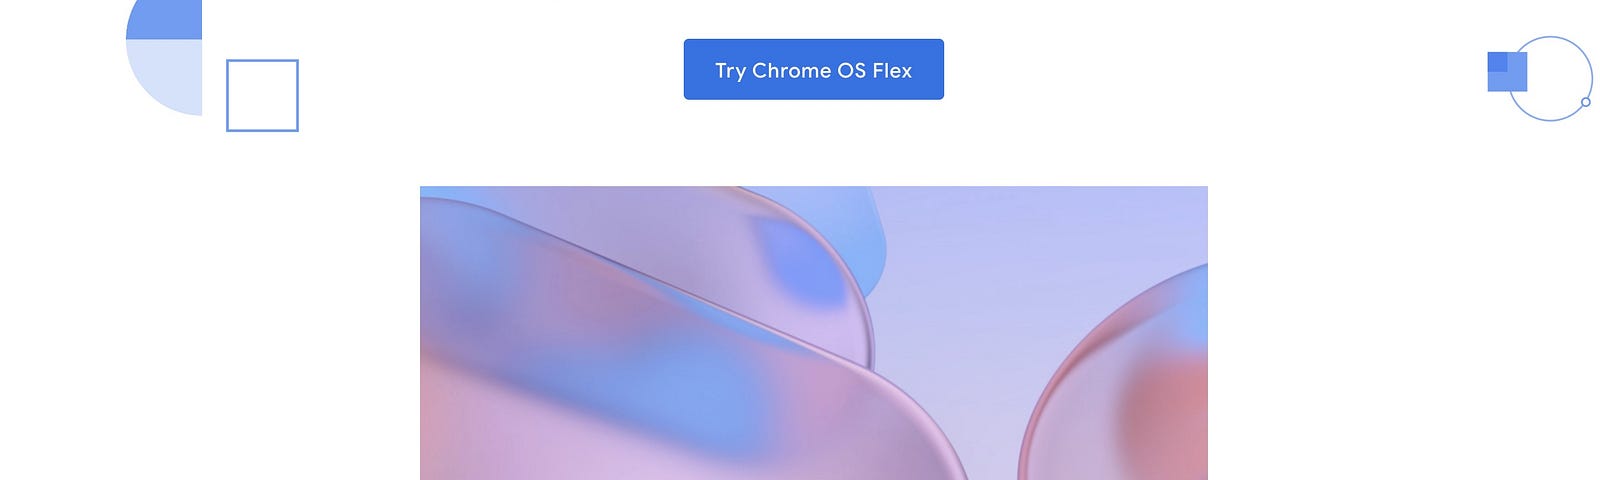 IMAGE: A cpature of the screen where Google introduces Google OS Chrome Flex